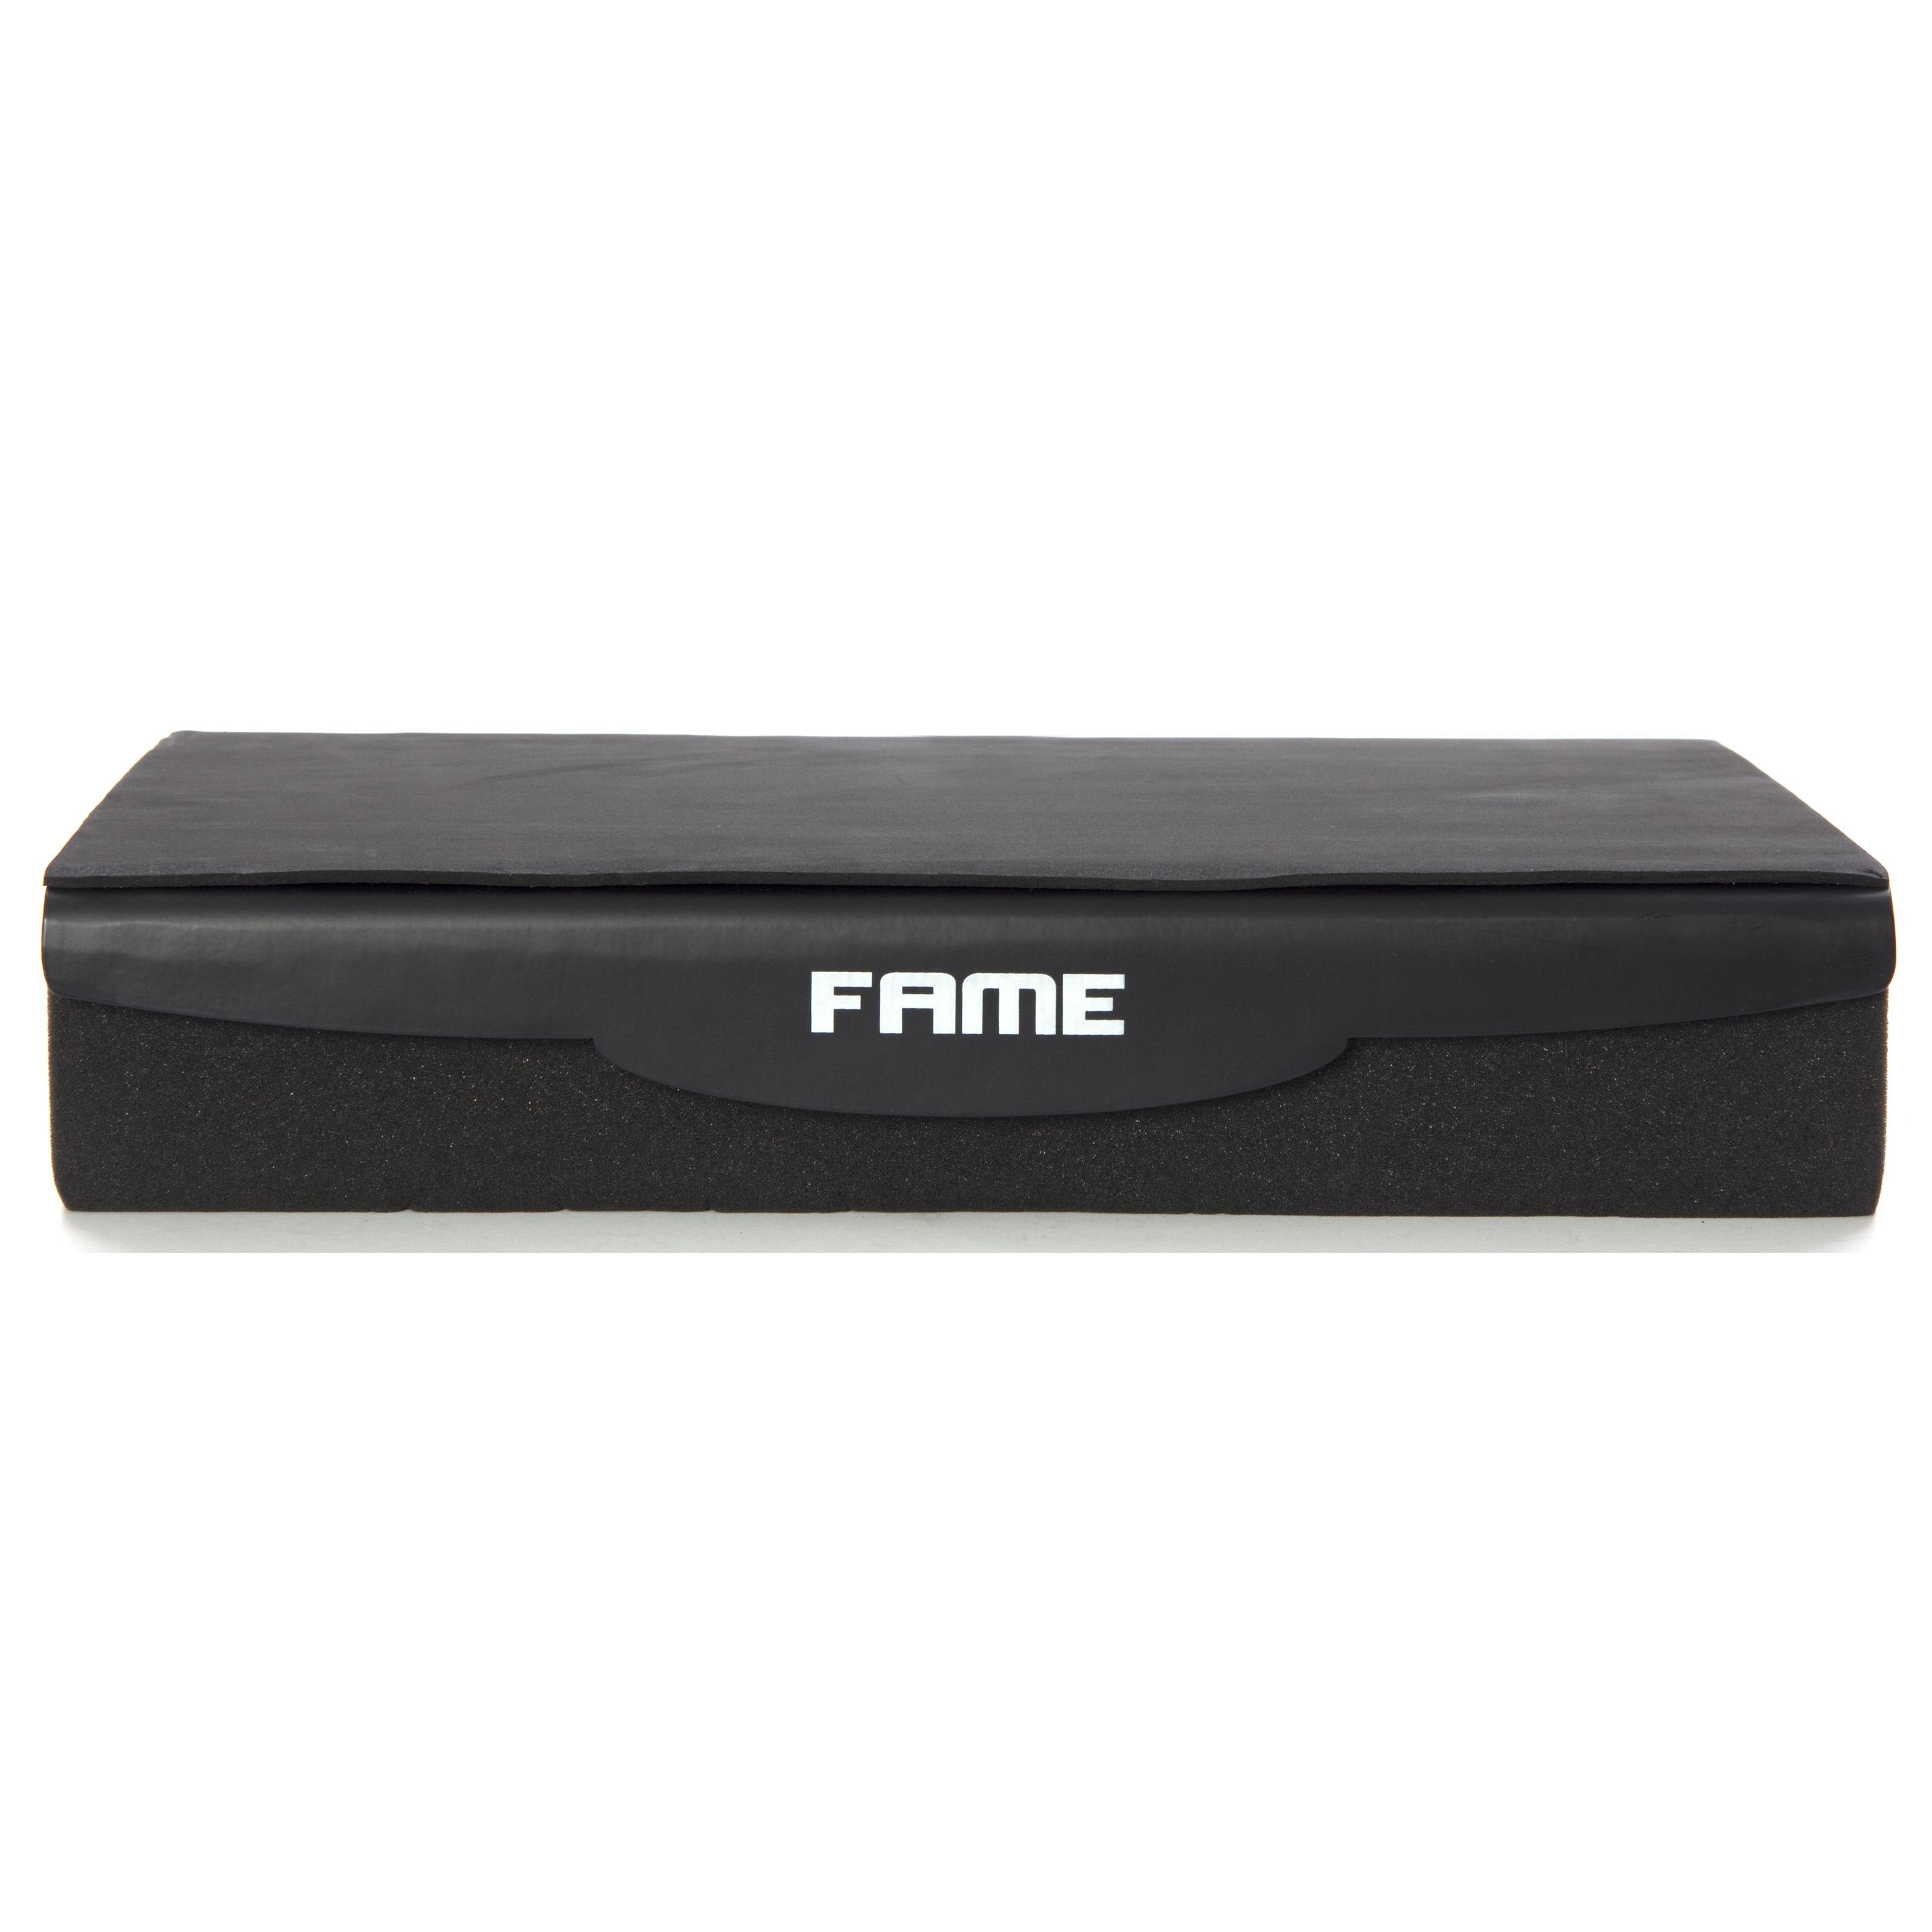 Fame Audio Home Speaker 5° Angle) (MSI-145